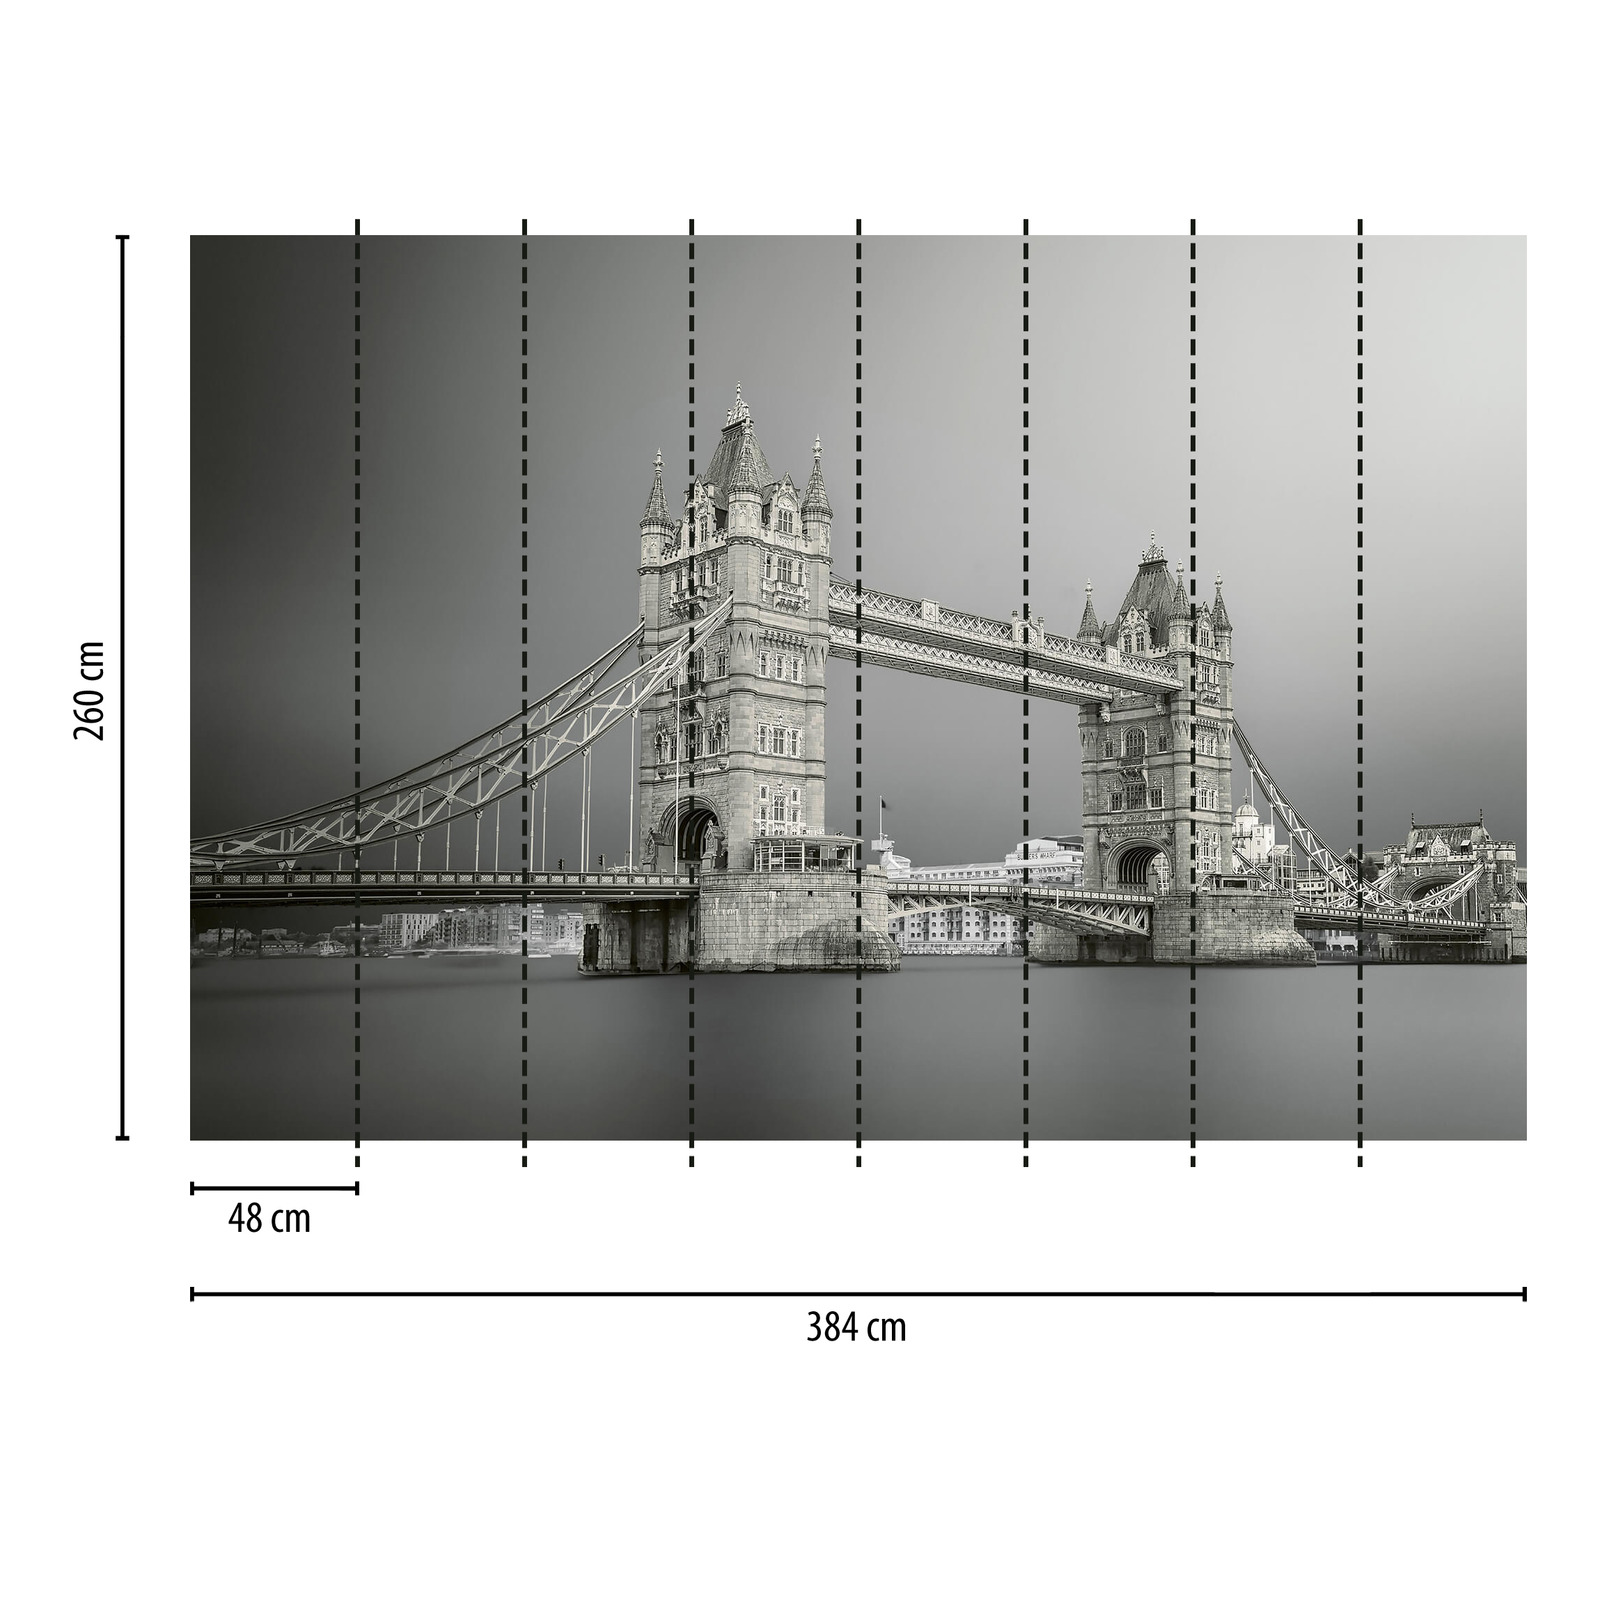             Fototapete Tower Bridge London – Grau, Weiß, Schwarz
        